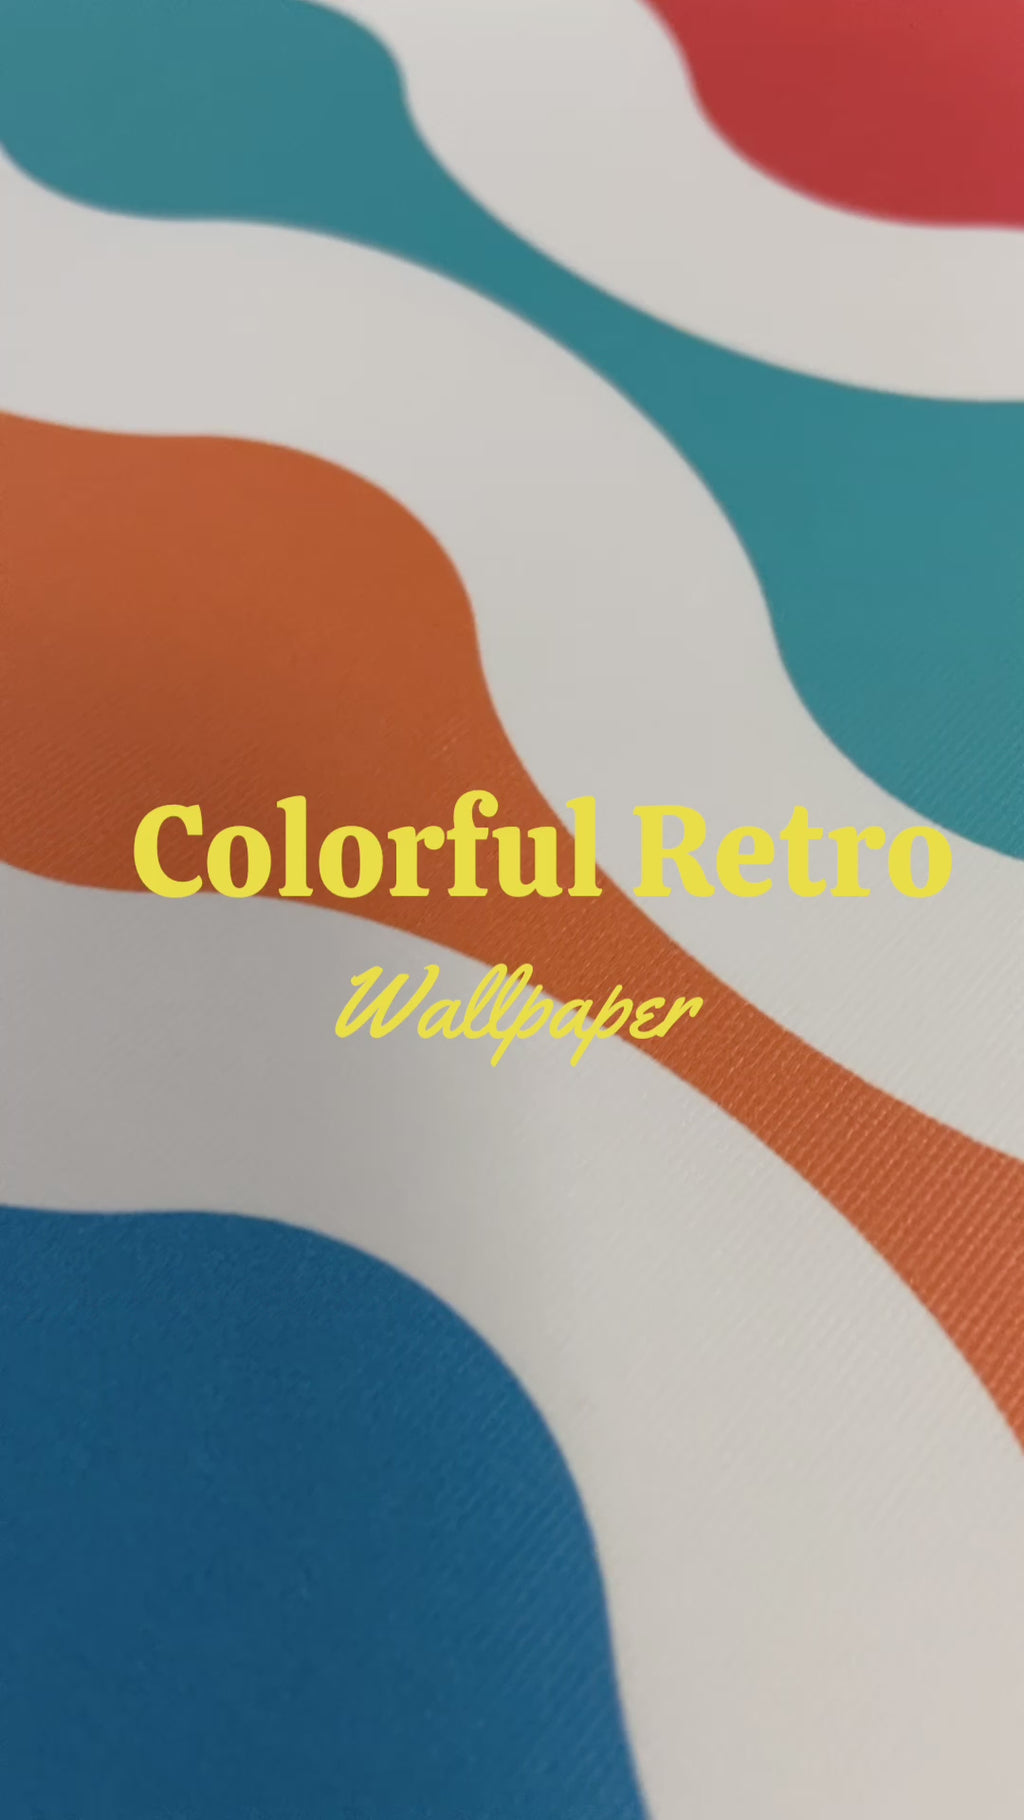 colorful retro wallpaper peel and stick